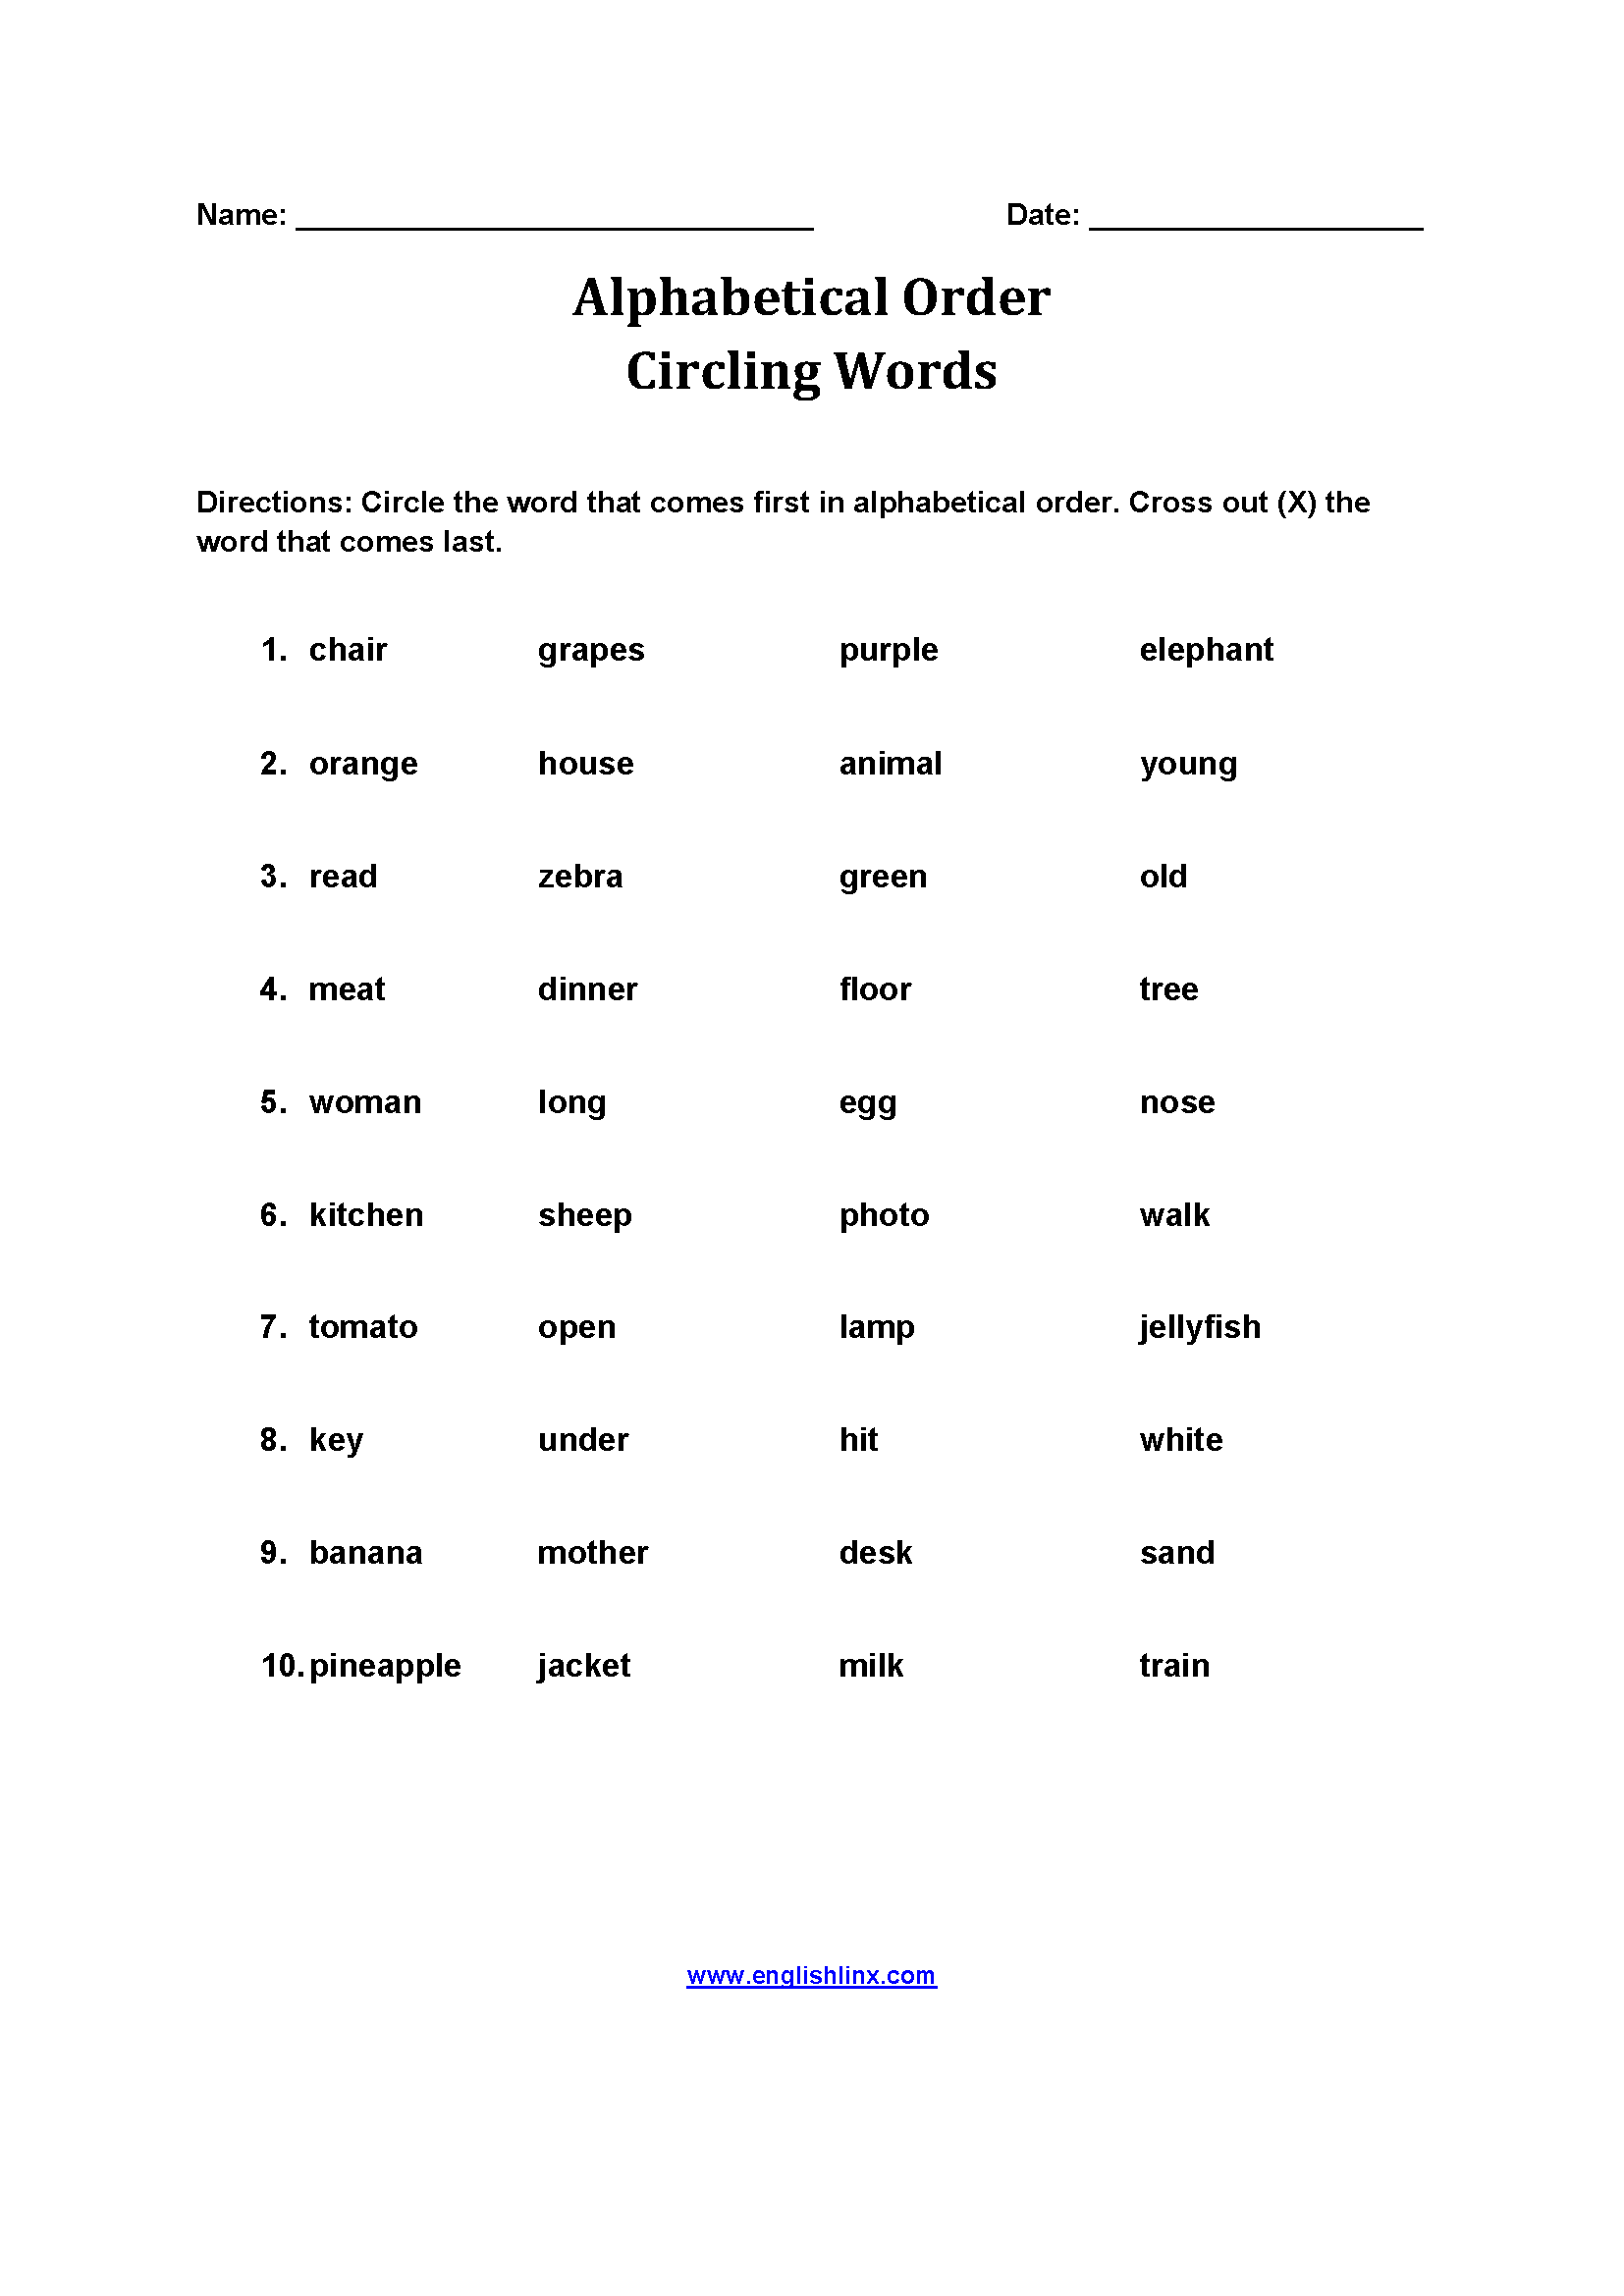 Circling Alphabetical Order Worksheets